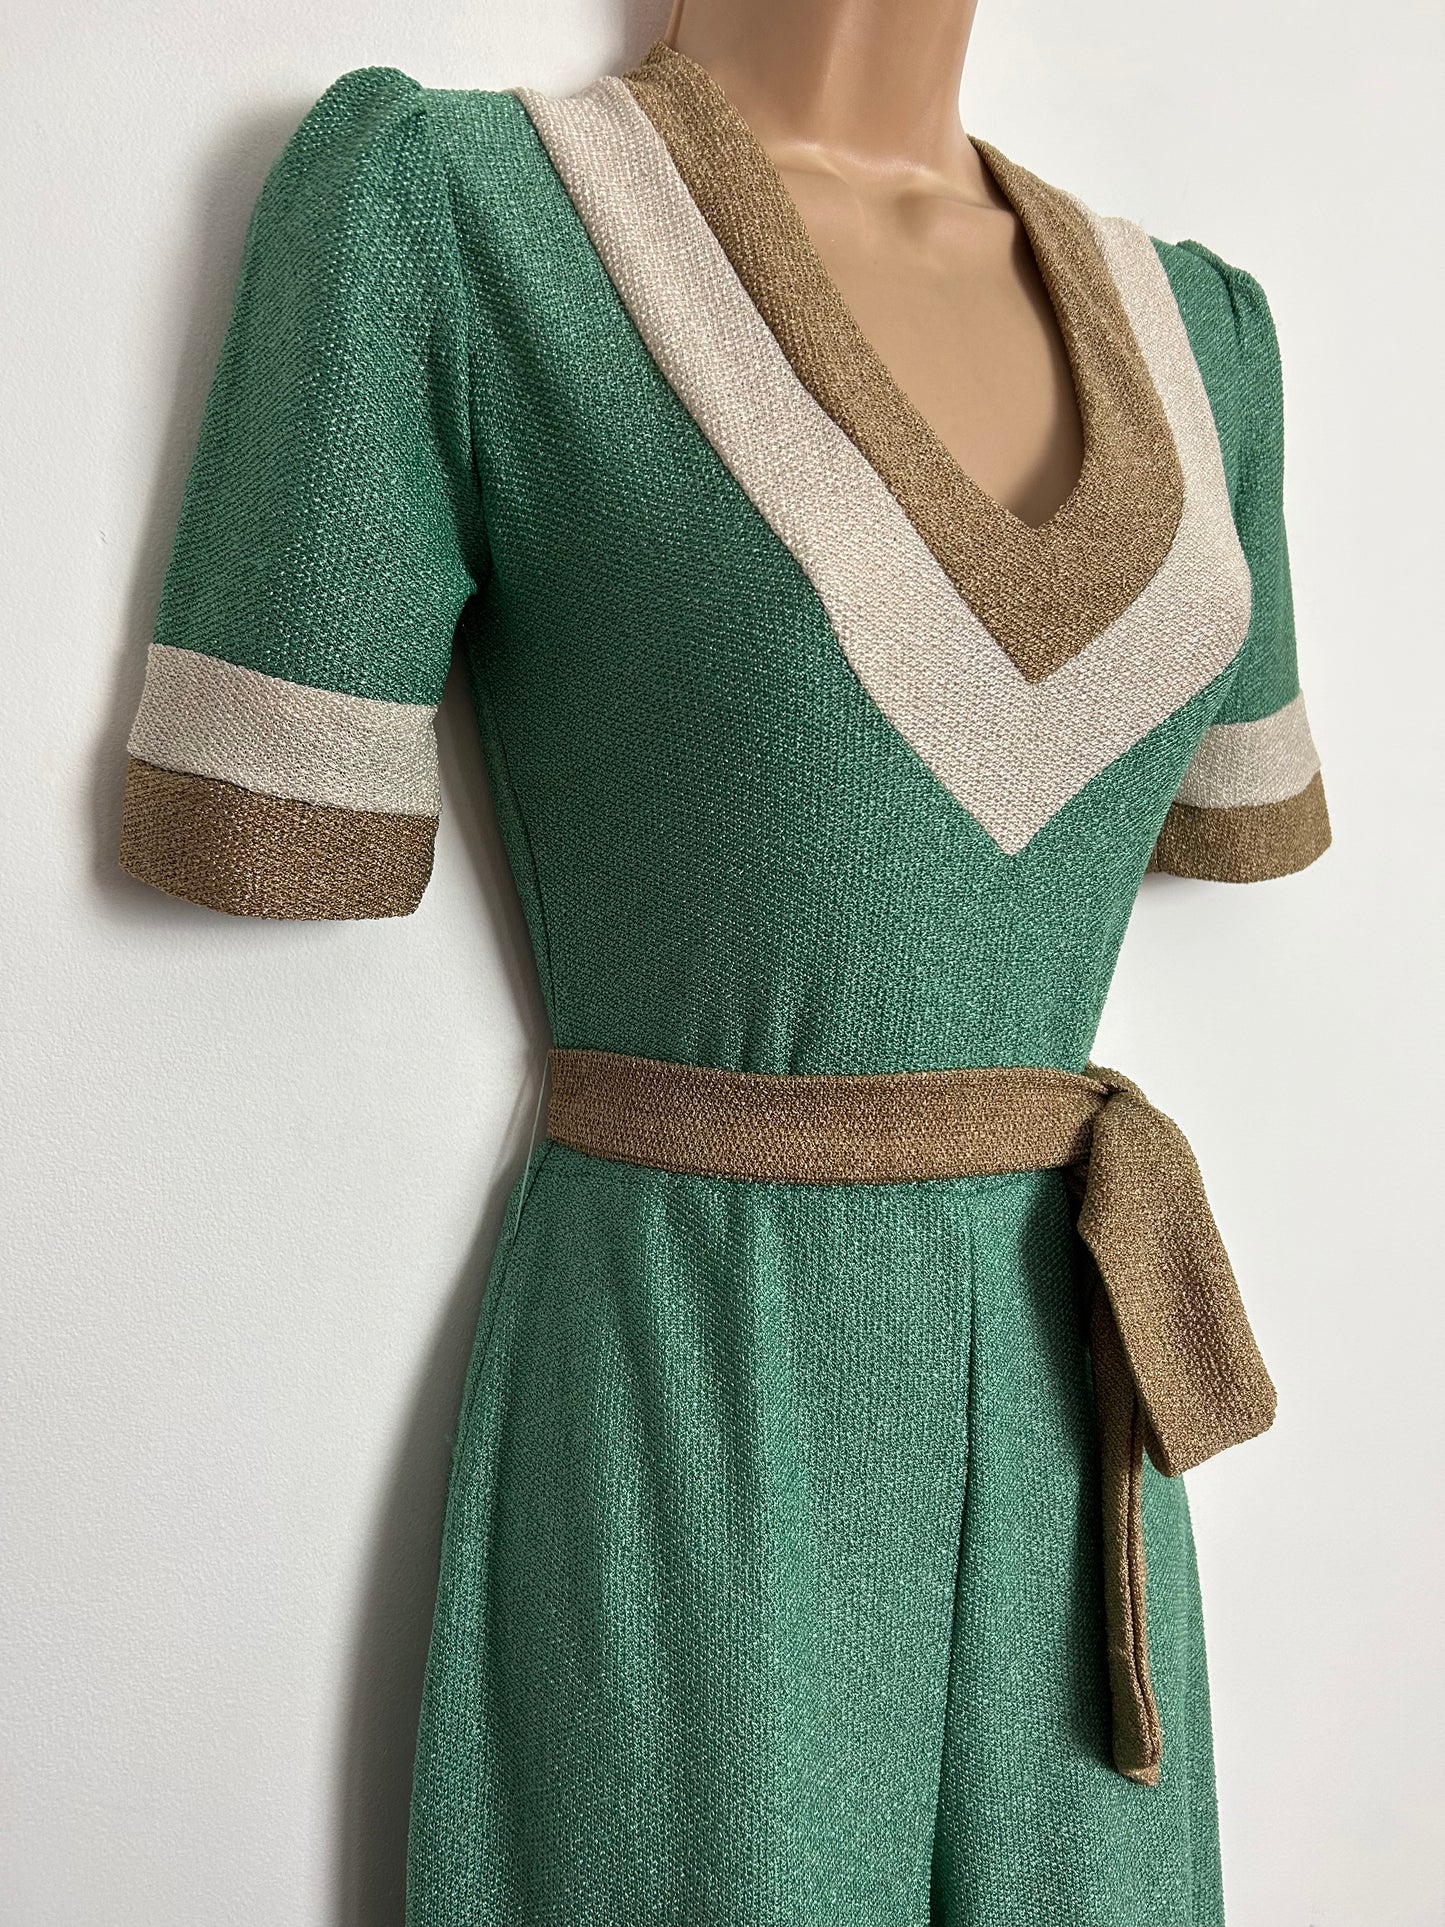 Vintage 1970s VAN ALLEN UK Size 6-8 Green Beige & Brown Stripe Short Sleeve Belted Wide Leg Palazzo Jumpsuit